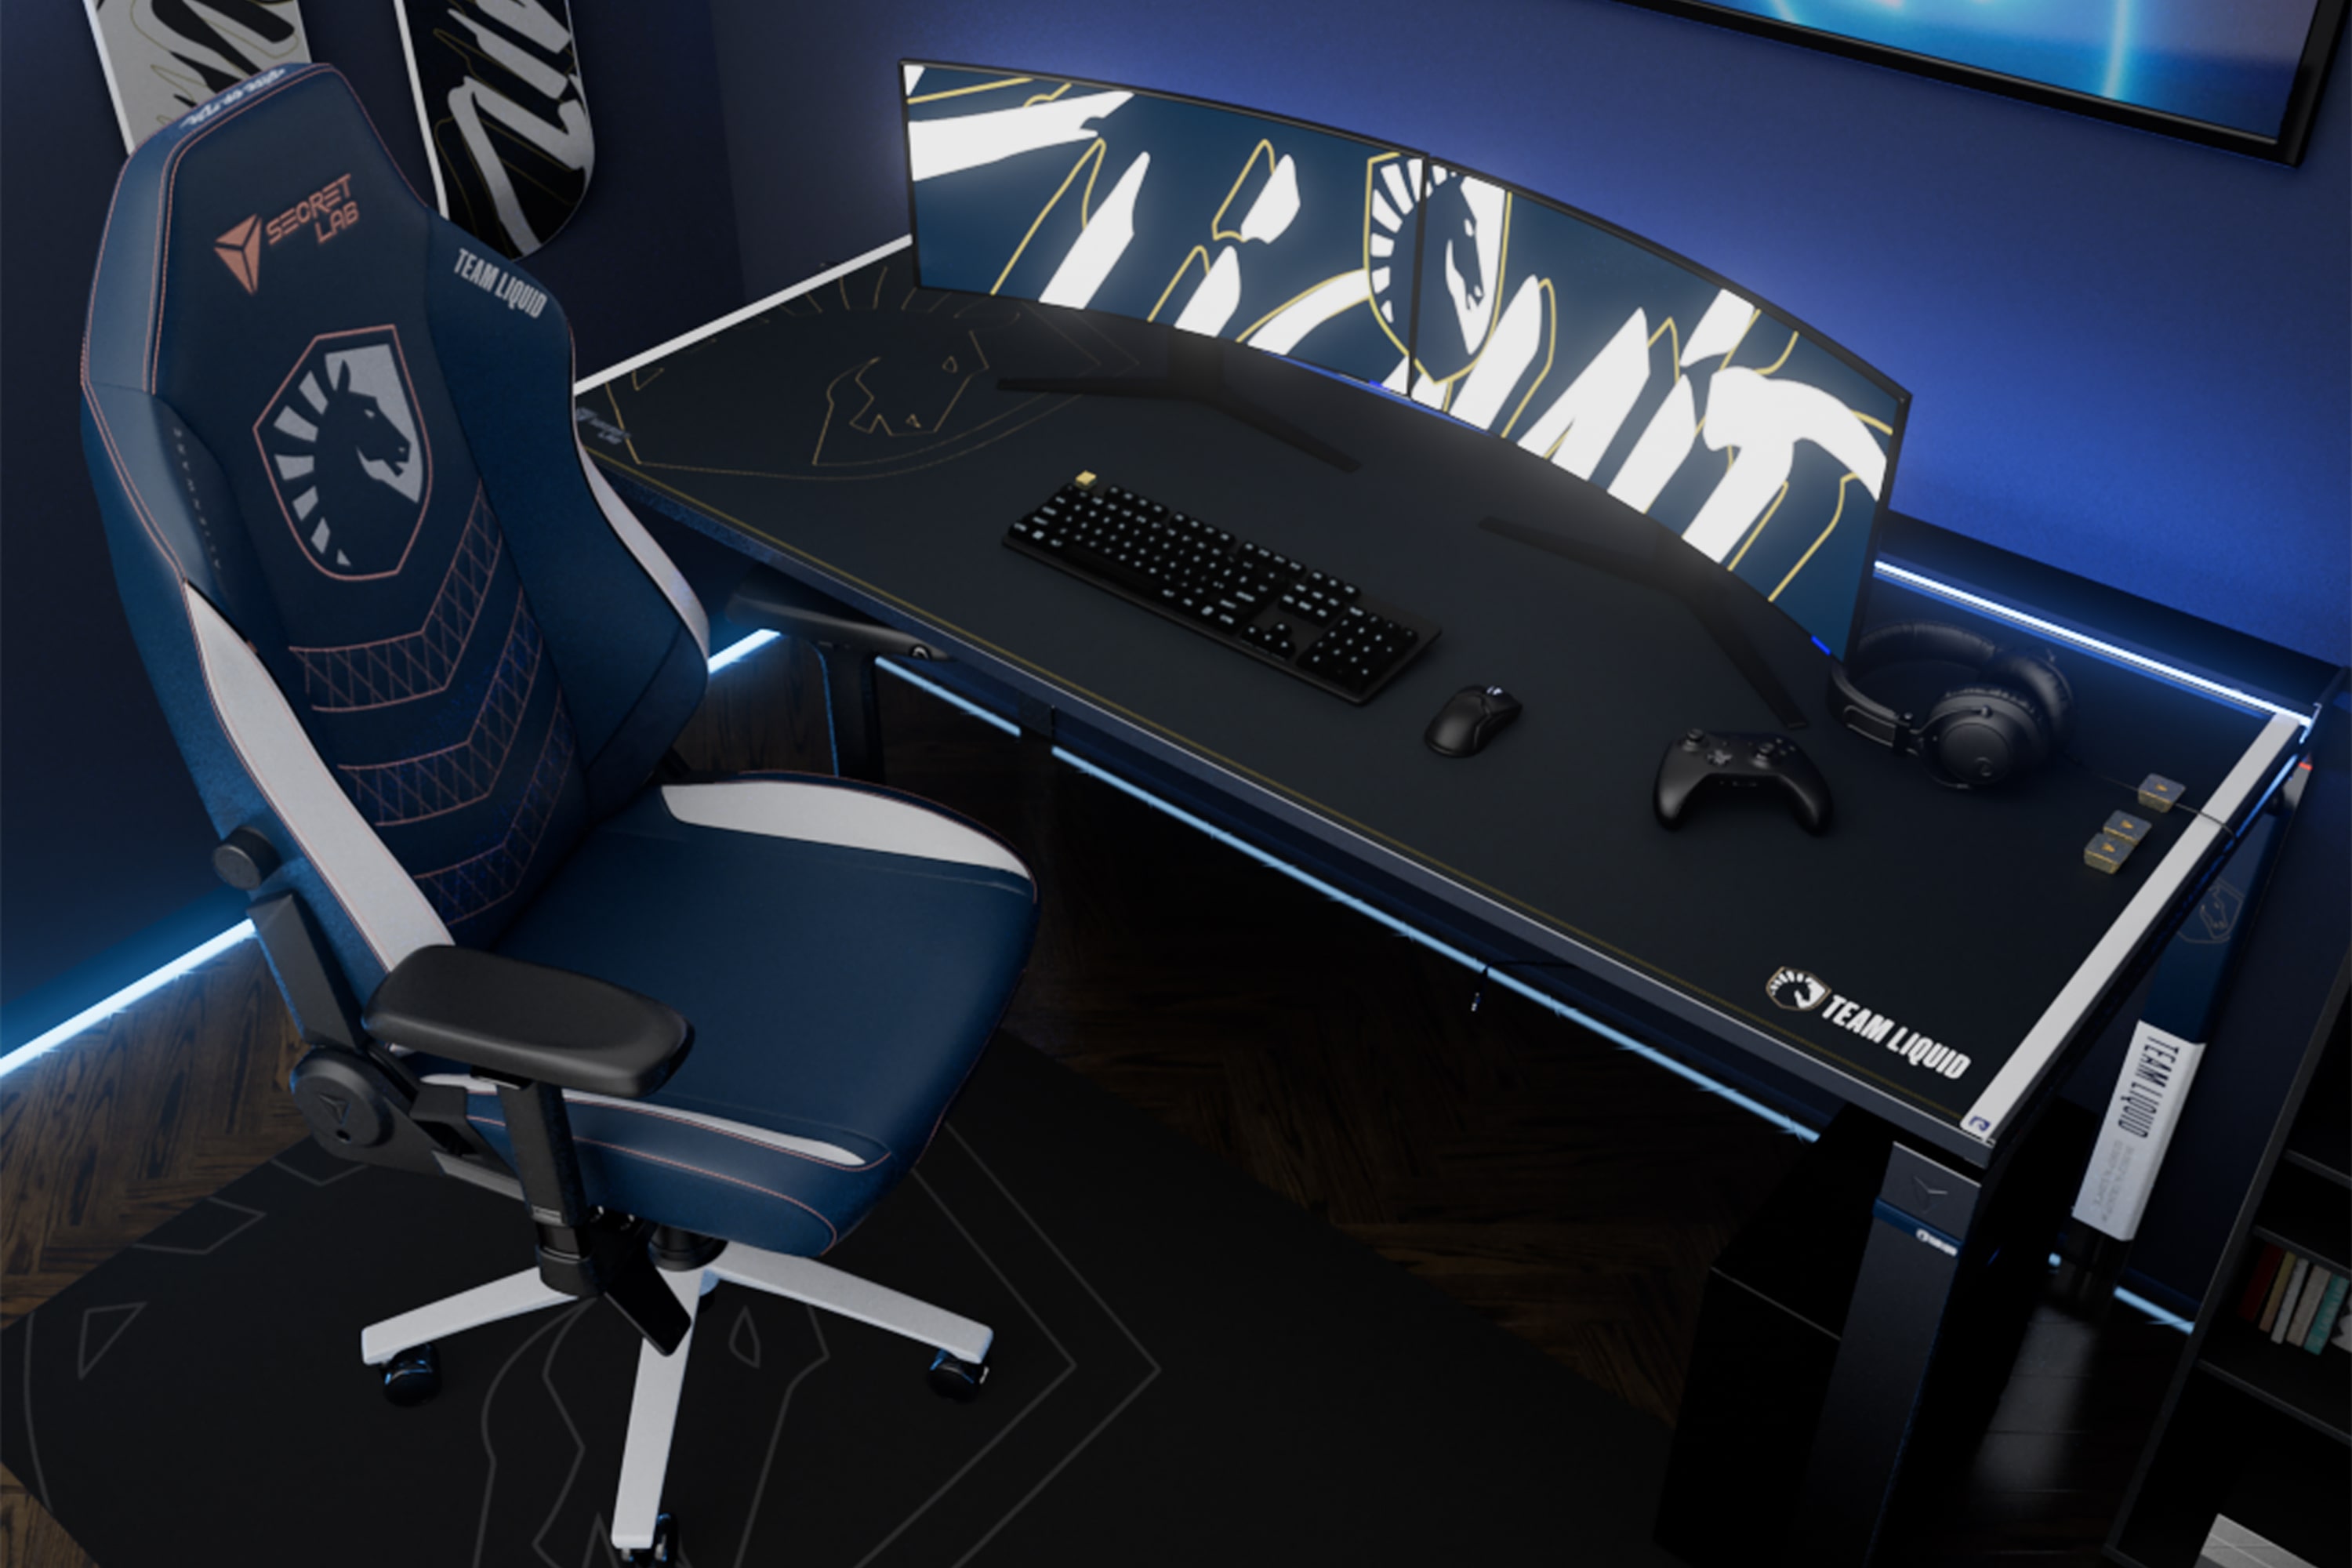 Team Secret x Secretlab gaming chair